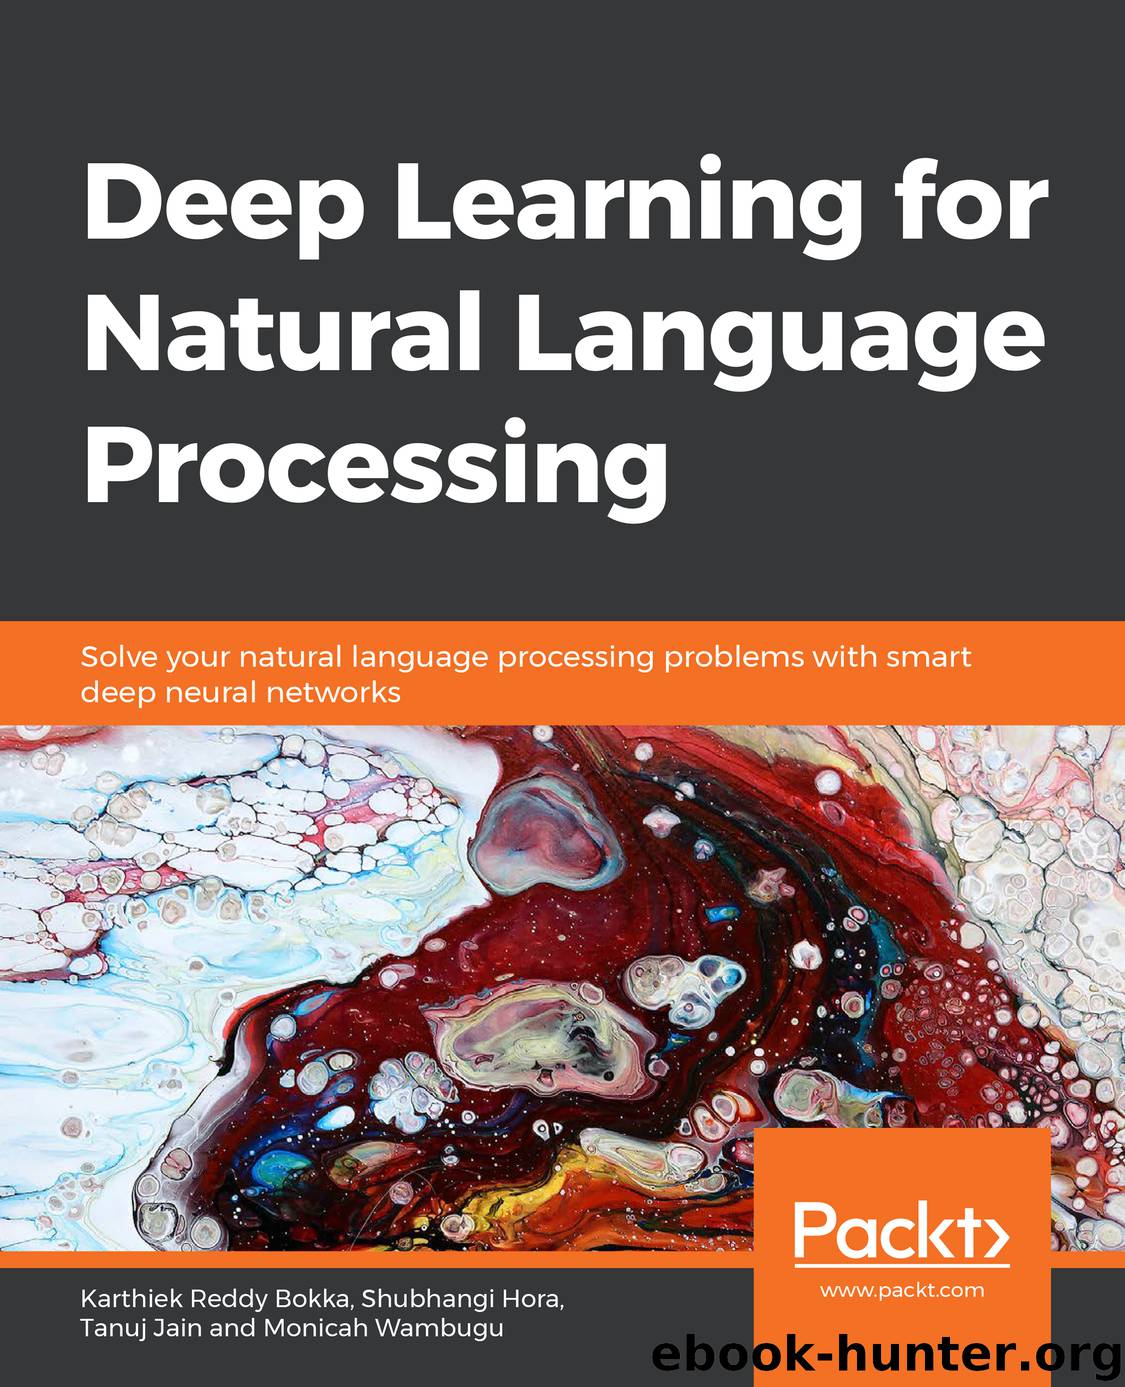 Deep Learning for Natural Language Processing by Karthiek Reddy Bokka